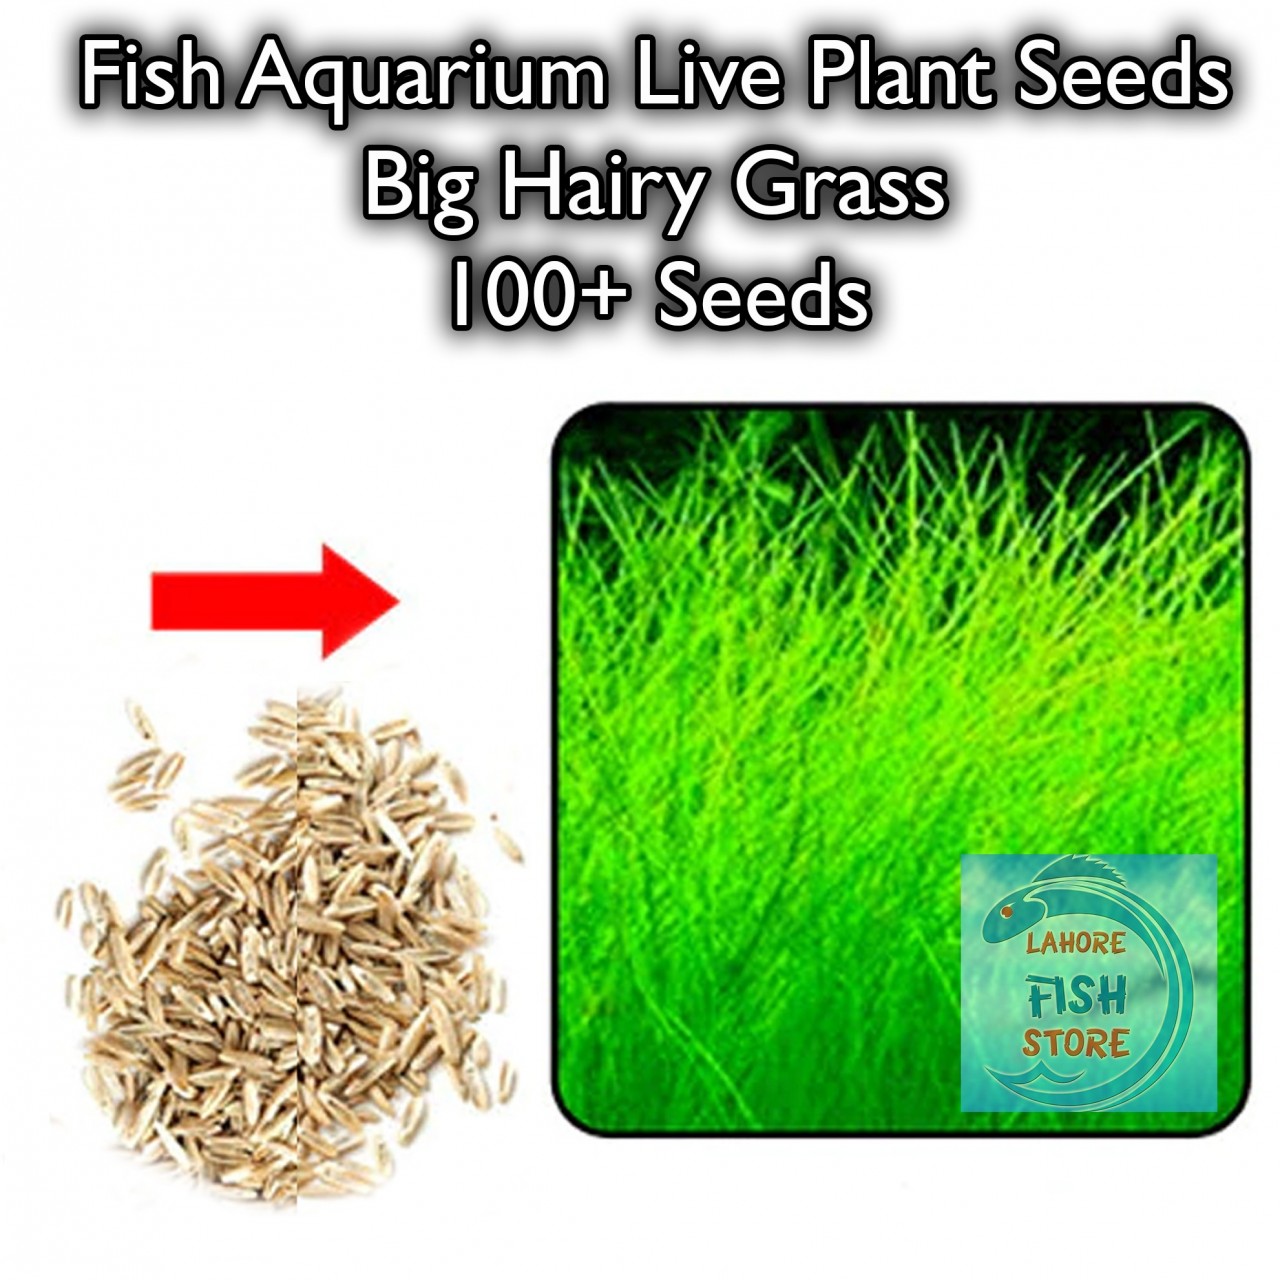 Fish Aquarium Live Plant Seeds - Big Hairy Grass - 100+ Seeds